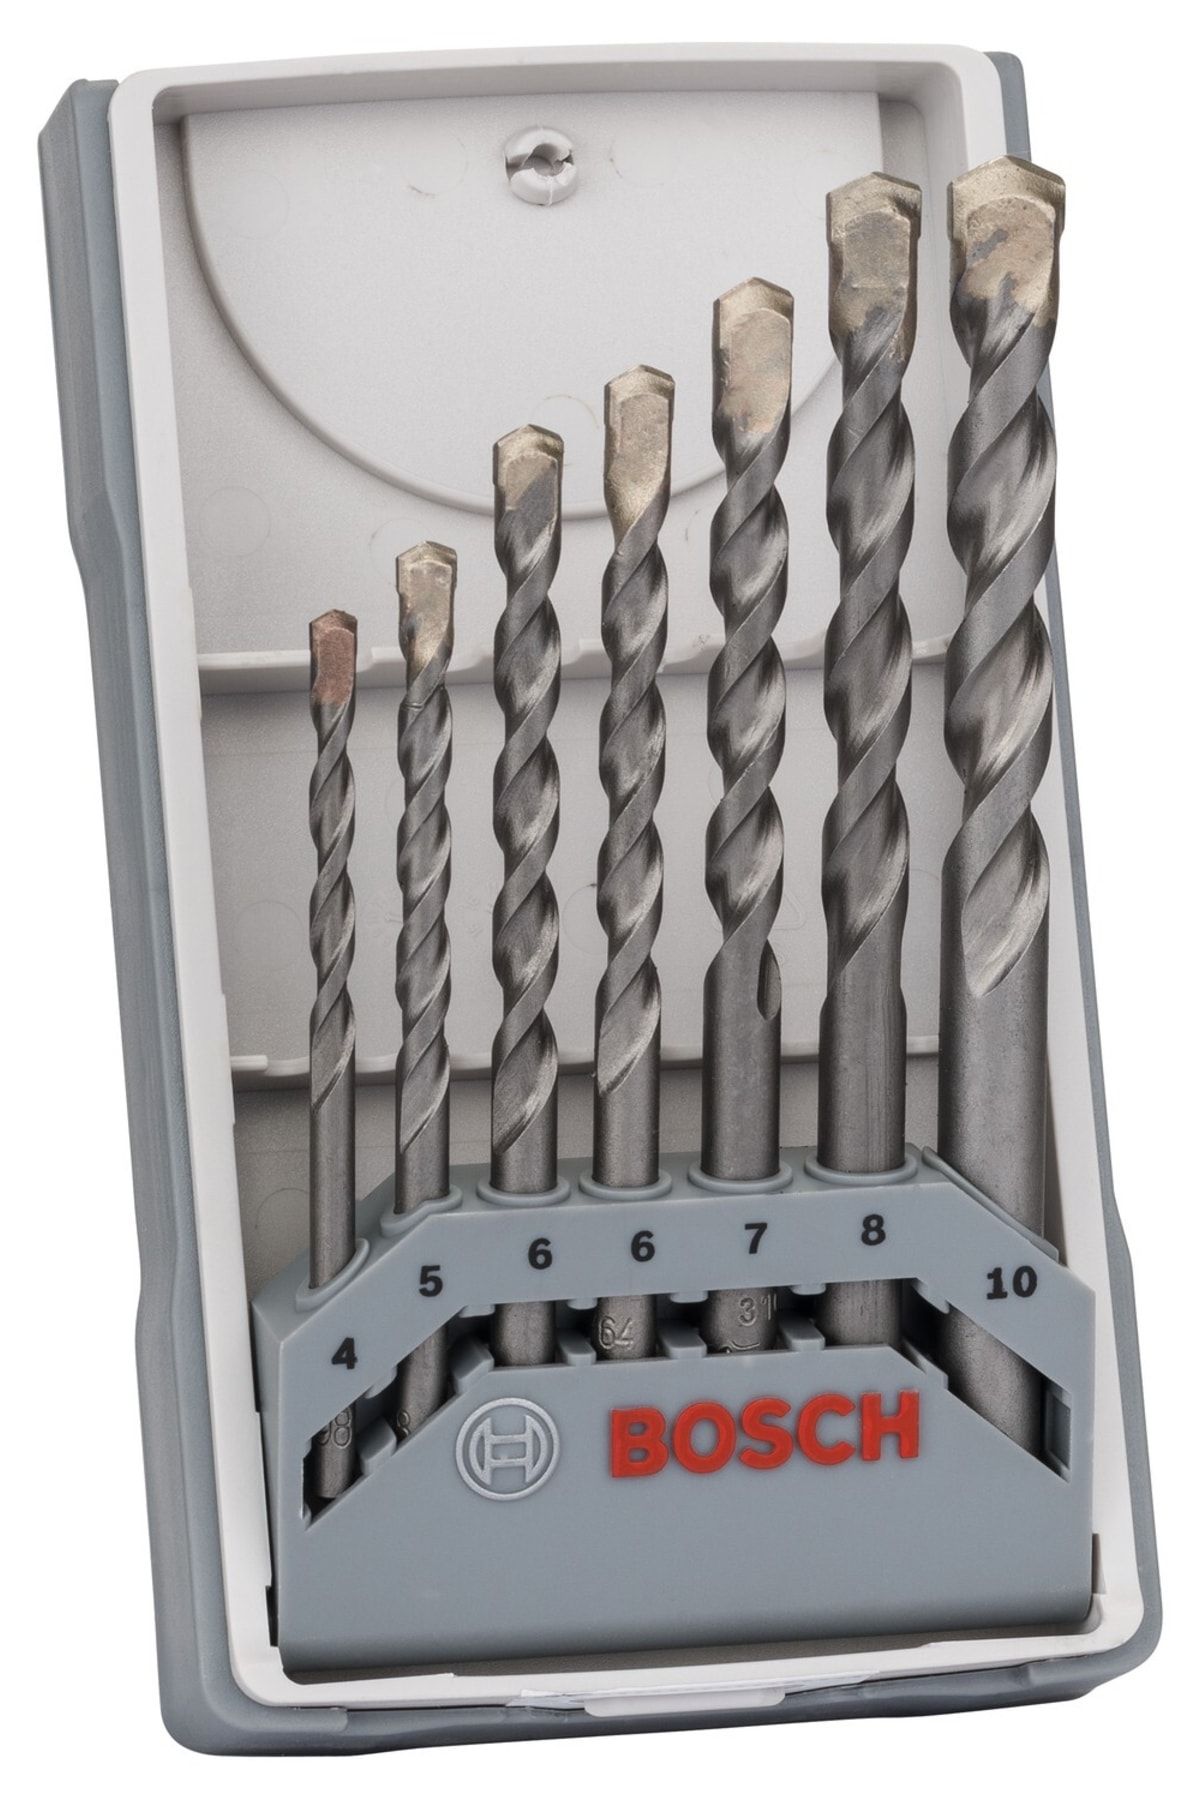 Bosch Cyl-3 Beton Matkap Ucu Seti - 7 Parça - 2607017082